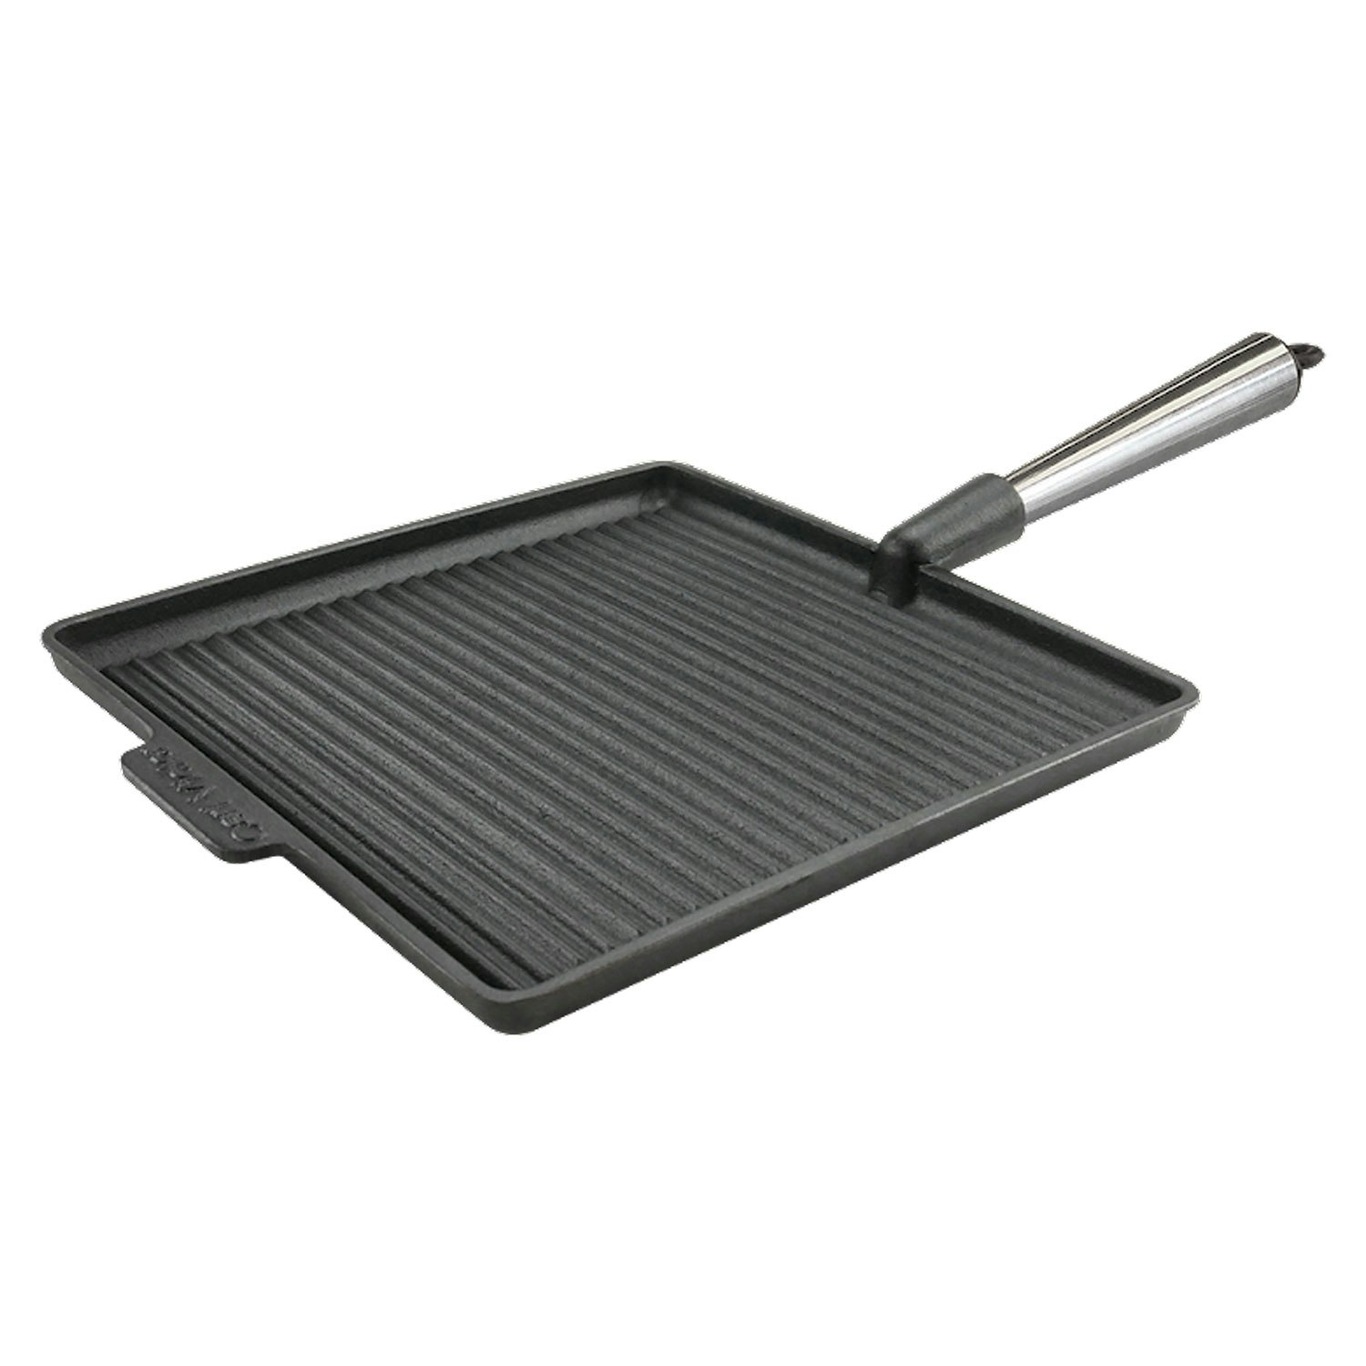 https://royaldesign.com/image/2/carl-victor-squared-grill-pan-28x28-cm-3?w=800&quality=80